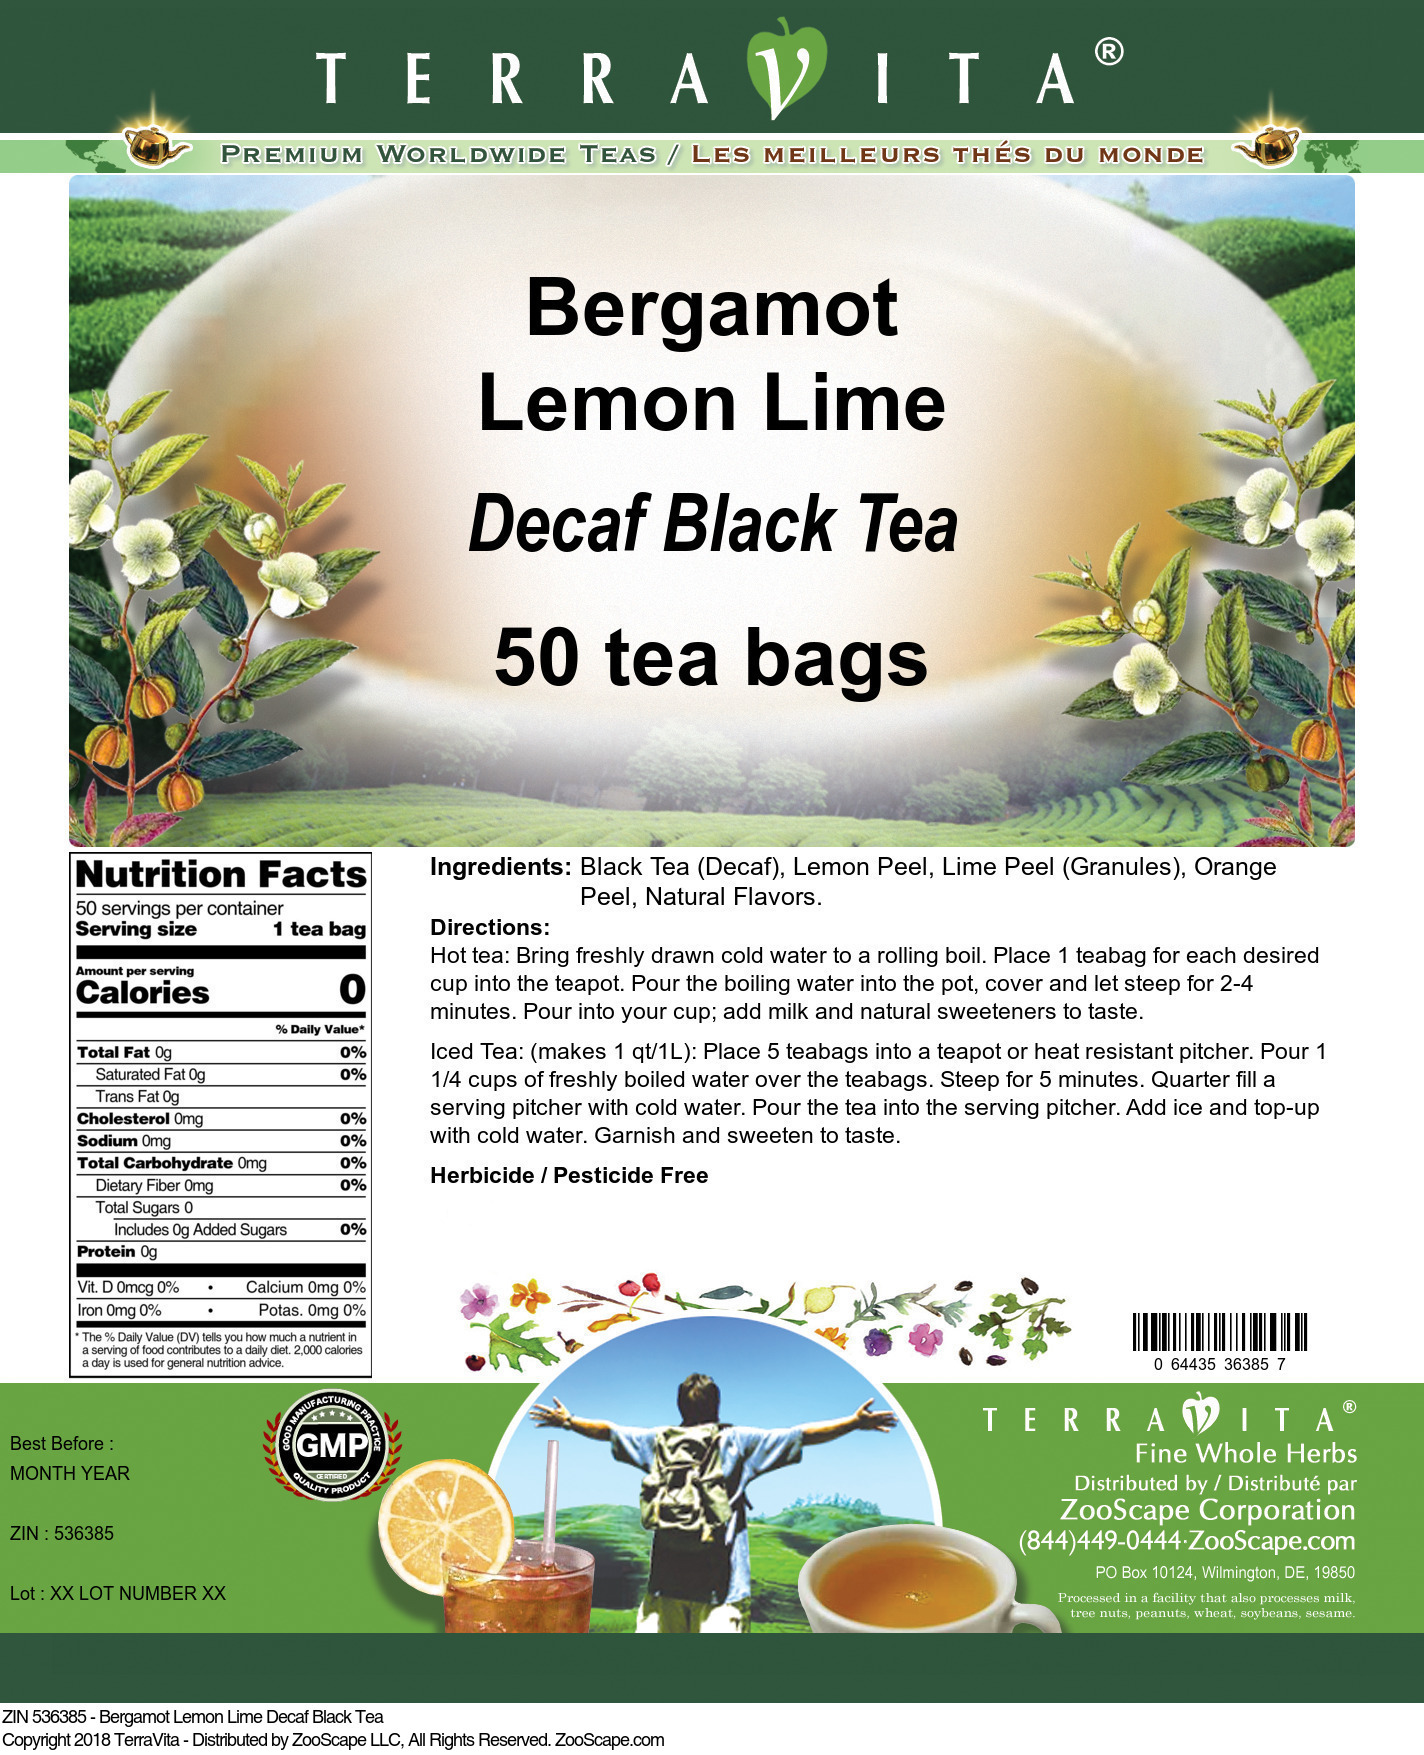 Bergamot Lemon Lime Decaf Black Tea - Label